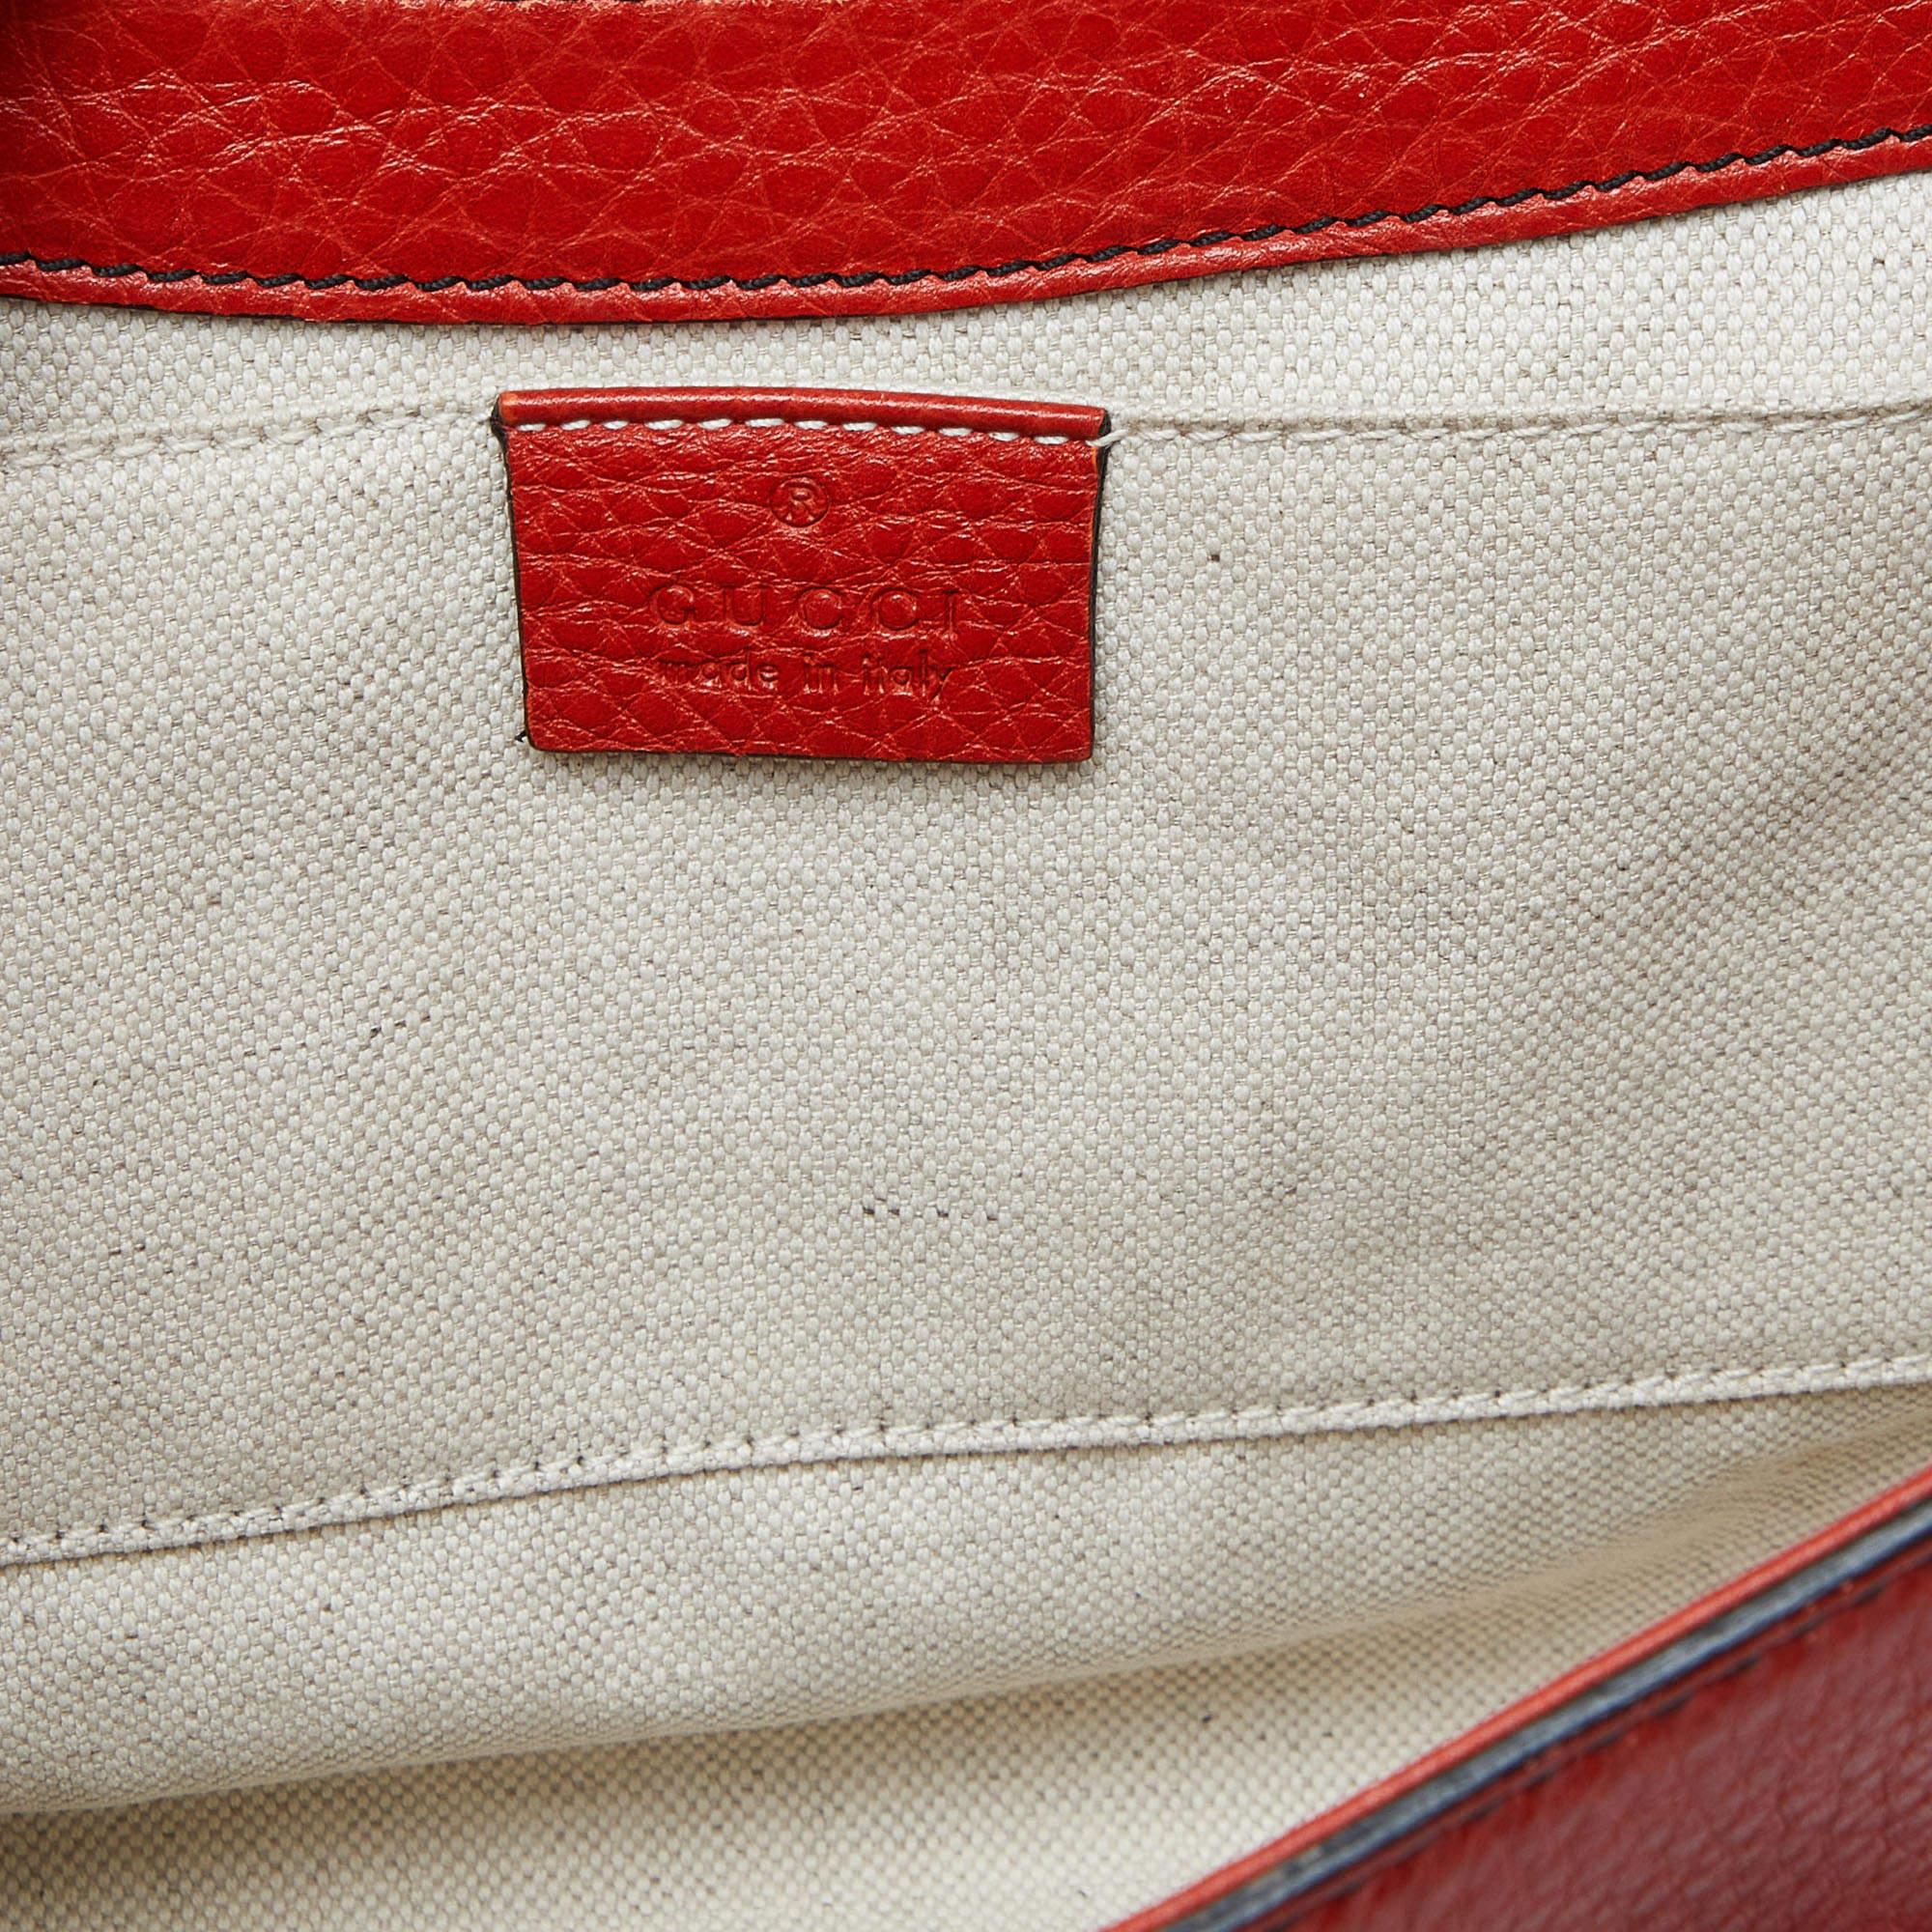 Gucci Coral Red Leather Medium Emily Shoulder Bag For Sale 7